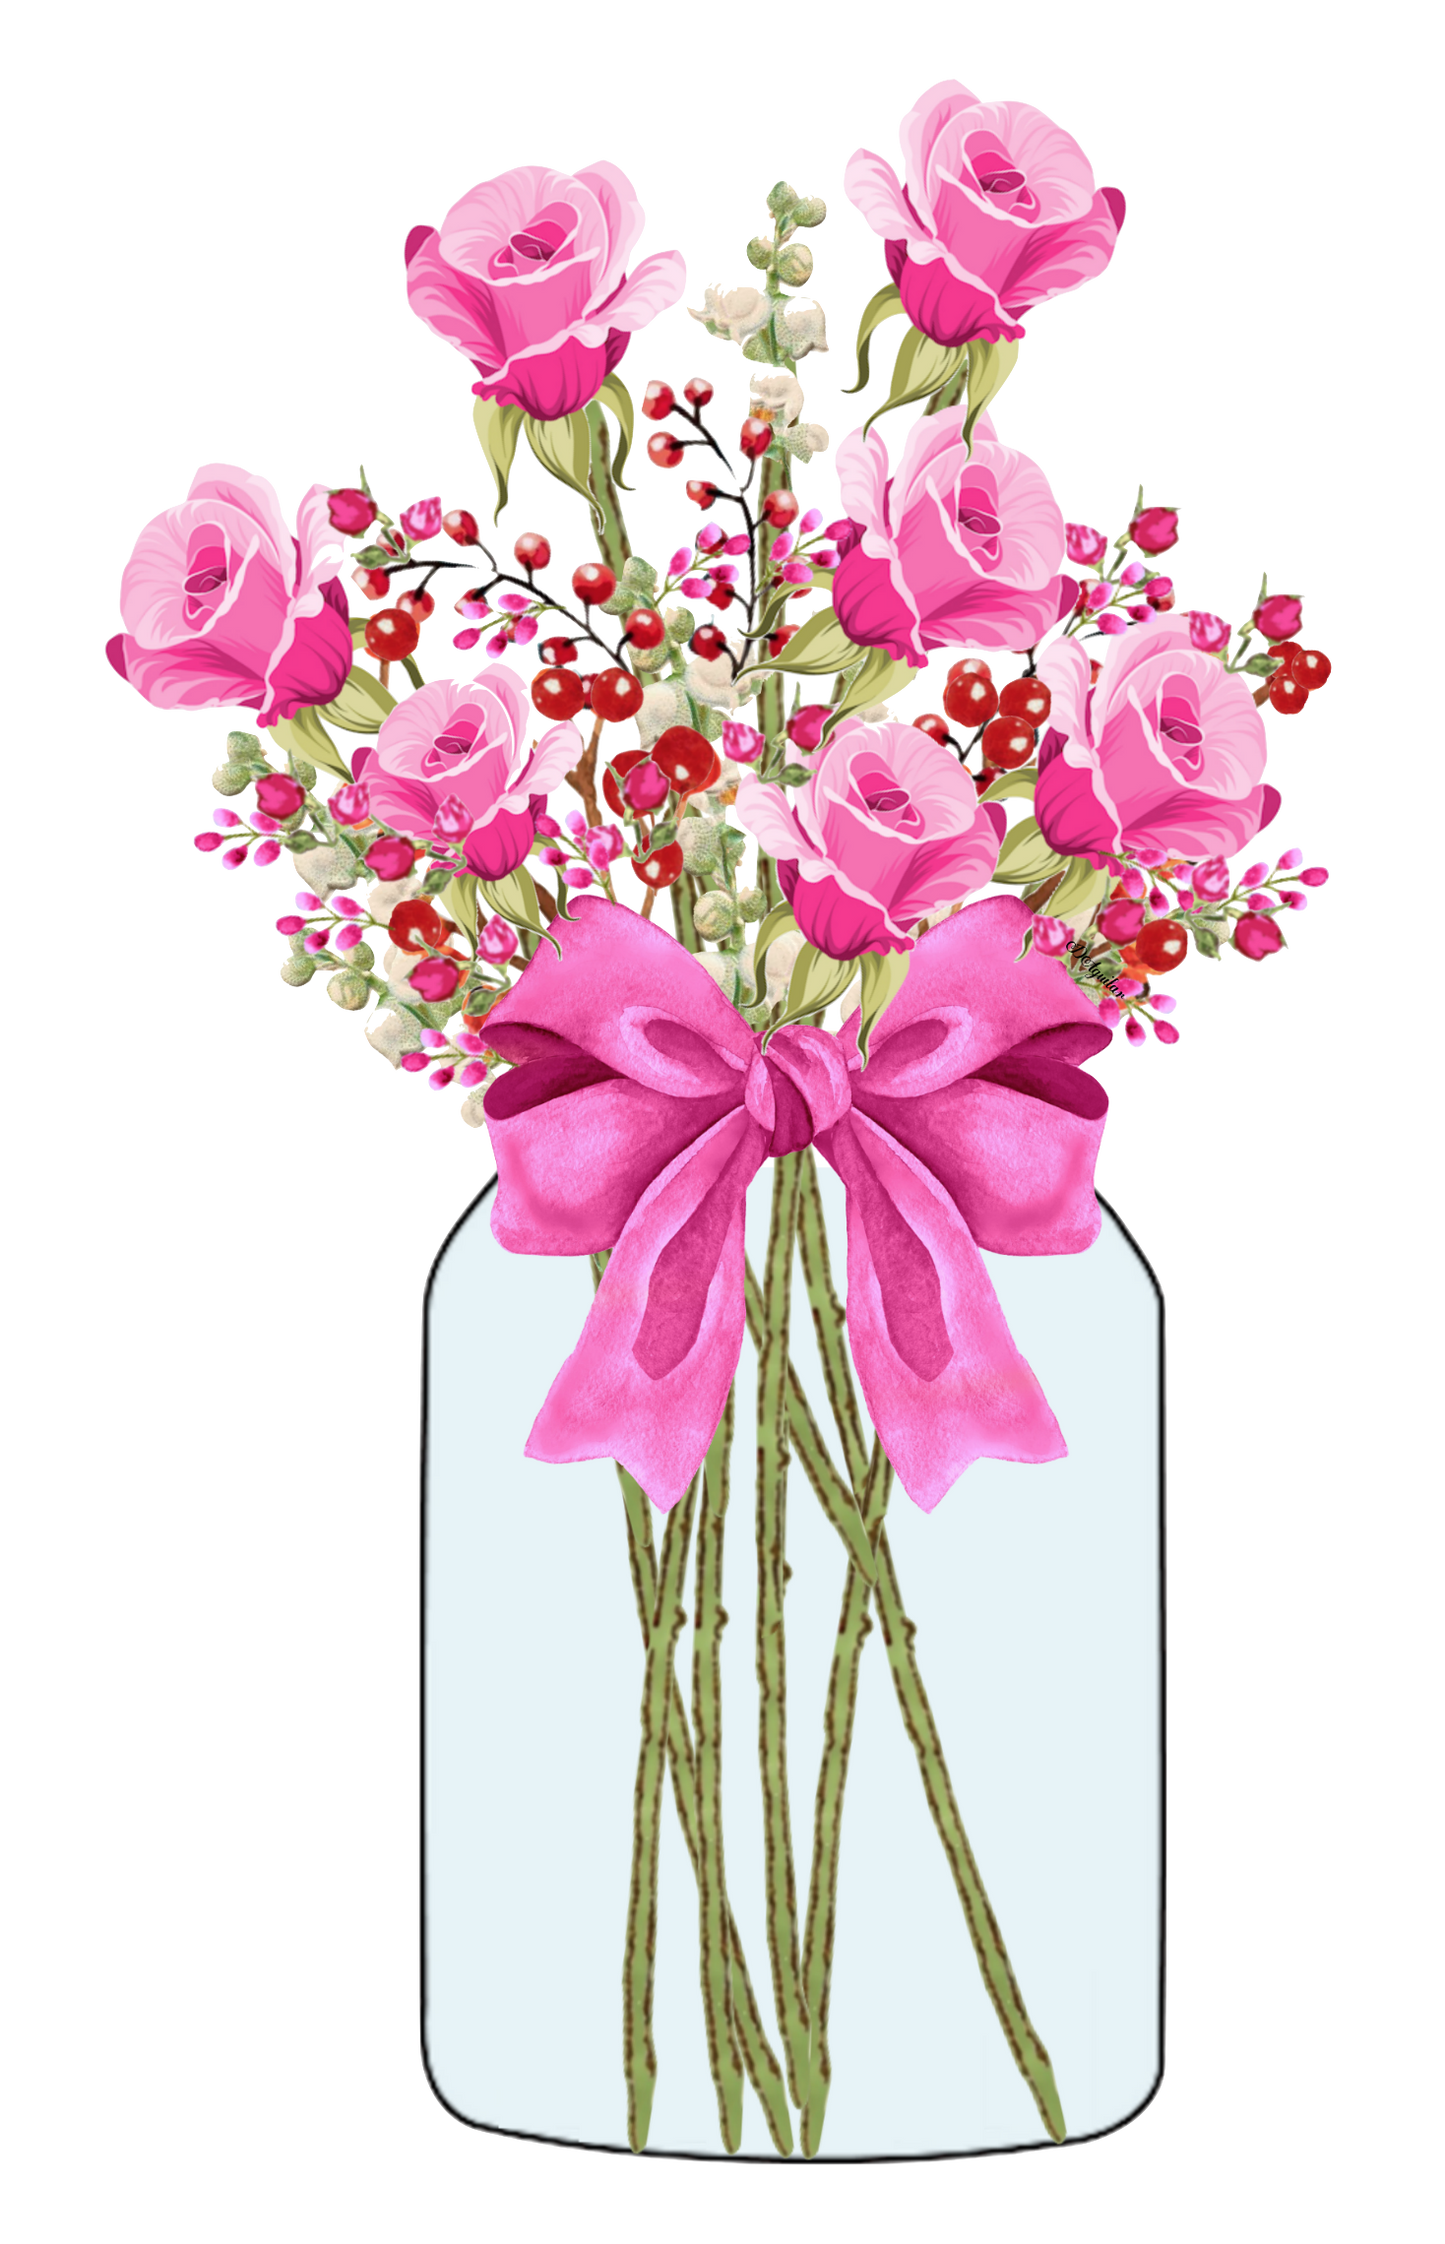 Beautiful Pink Roses in a Jar